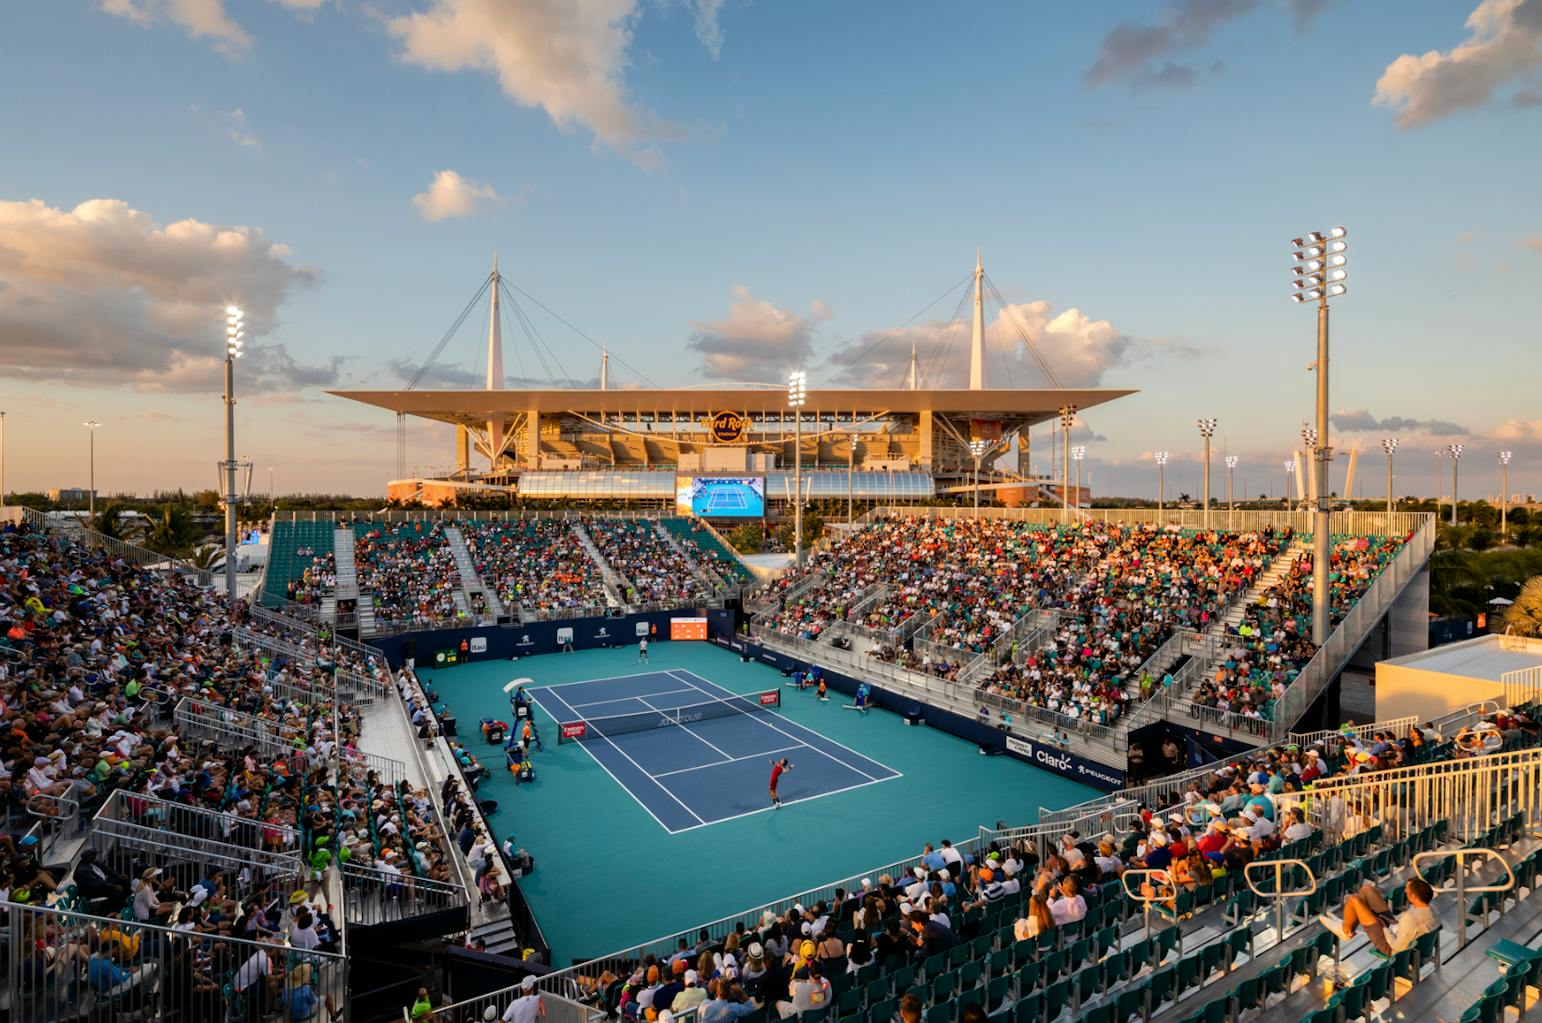 Теннисный стадион. Теннисный корт Майами. Хард рок Стэдиум Майами. Miami open 2022. Стадион Хард рок Майами.